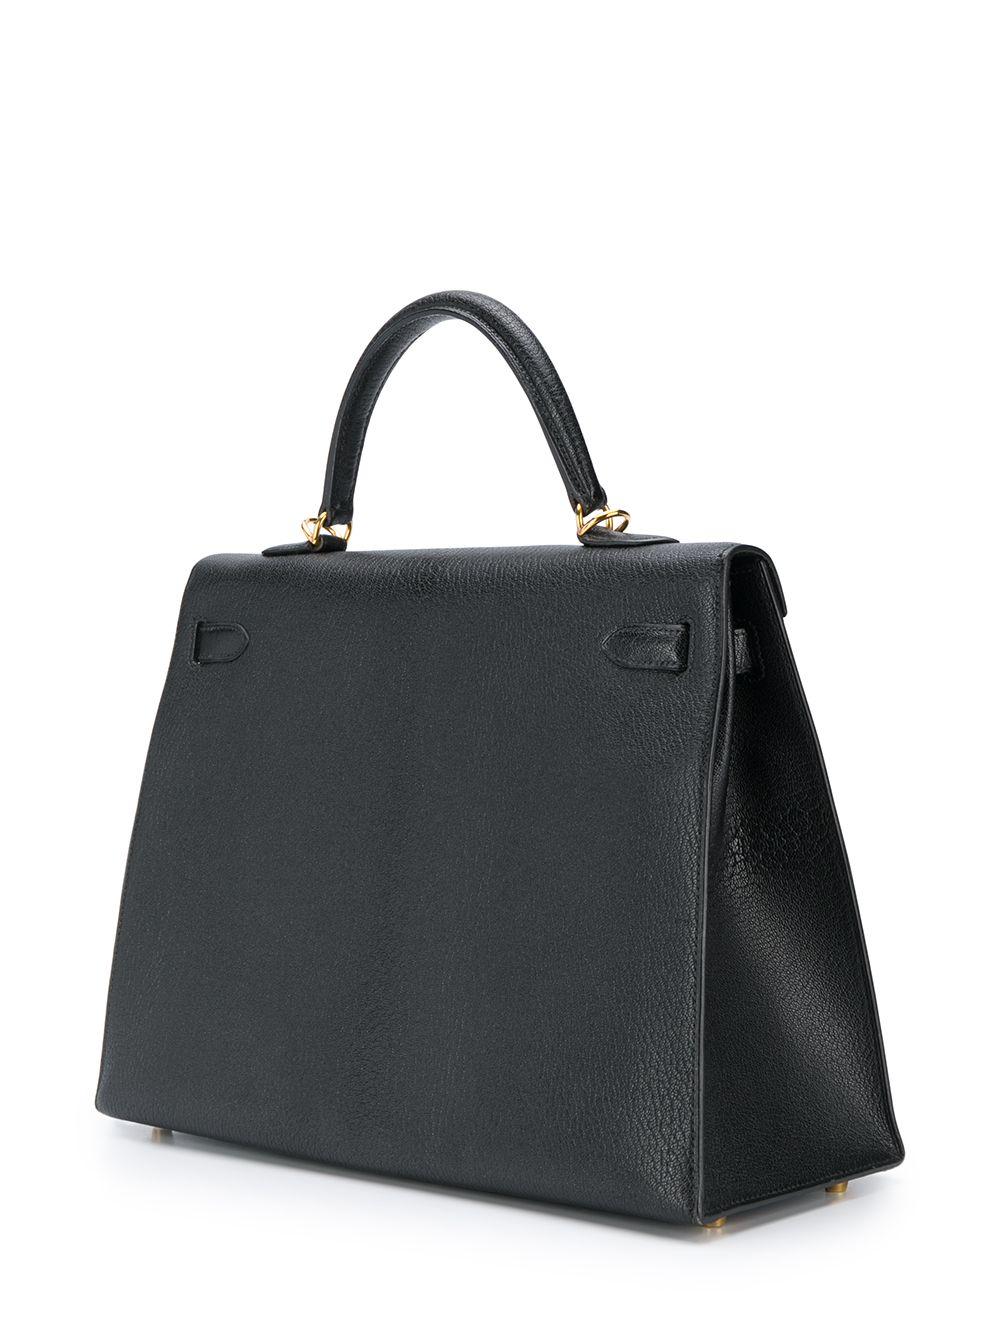 Hermès Black 35cm Kelly Sellier Bag In Good Condition In London, GB